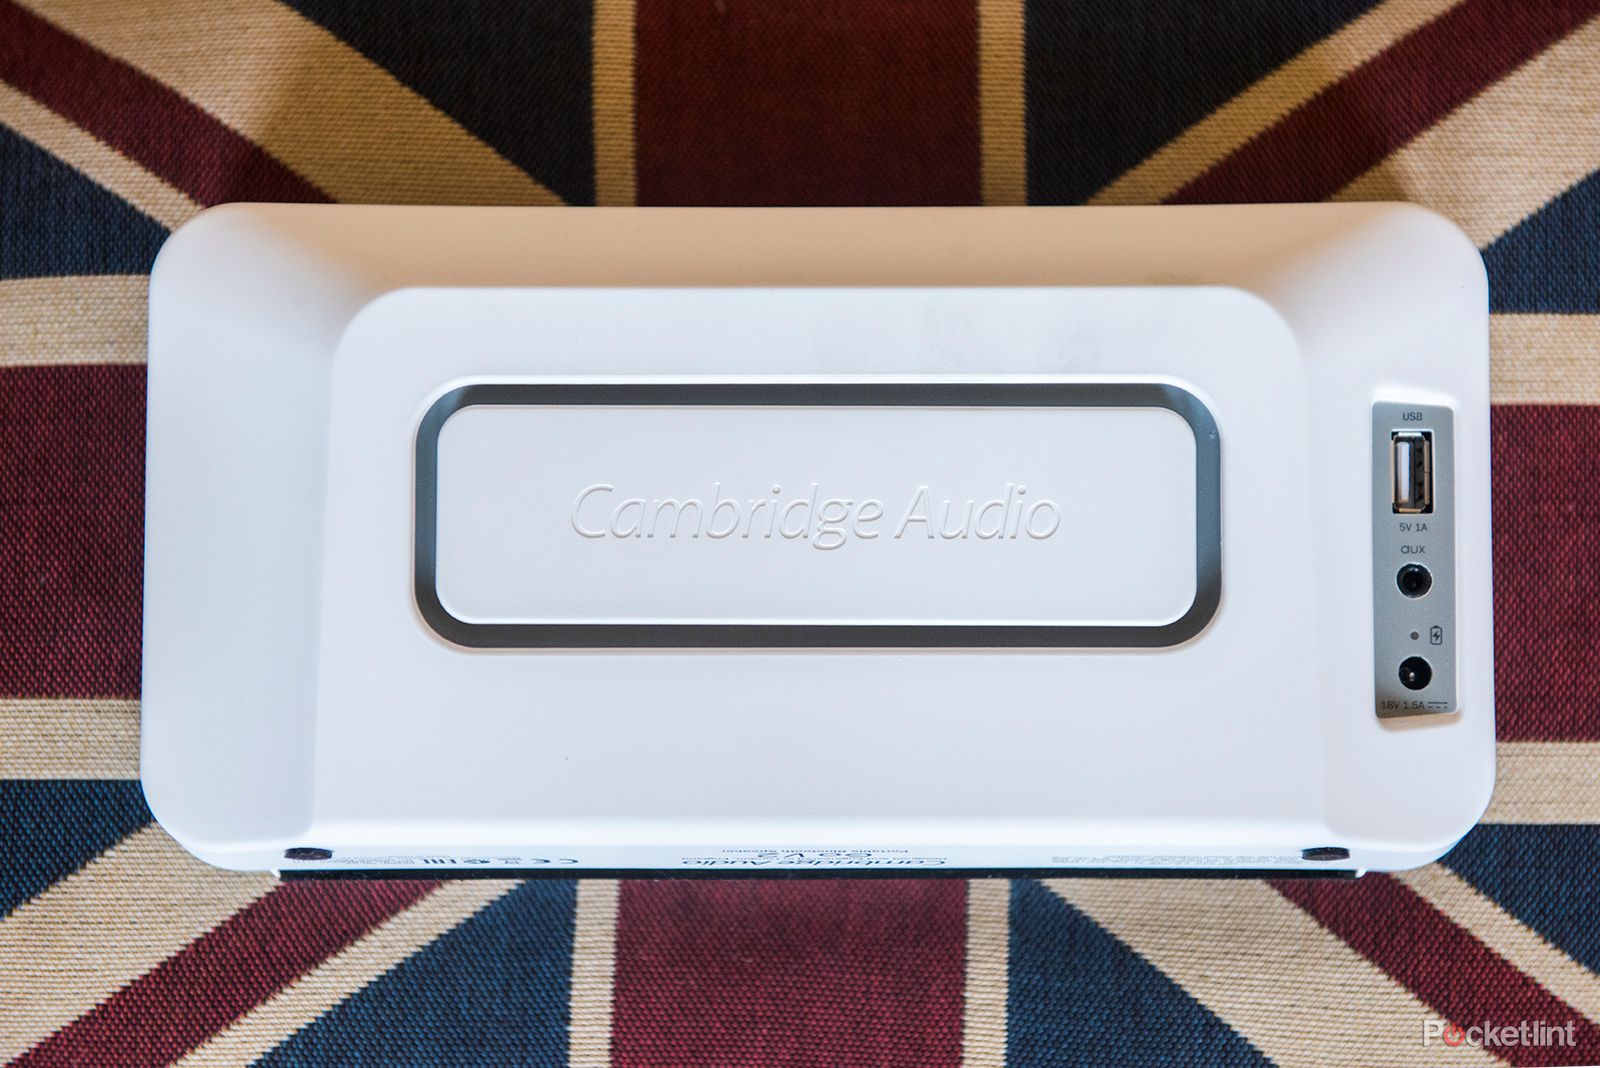 cambridge audio go v2 portable speaker review image 3